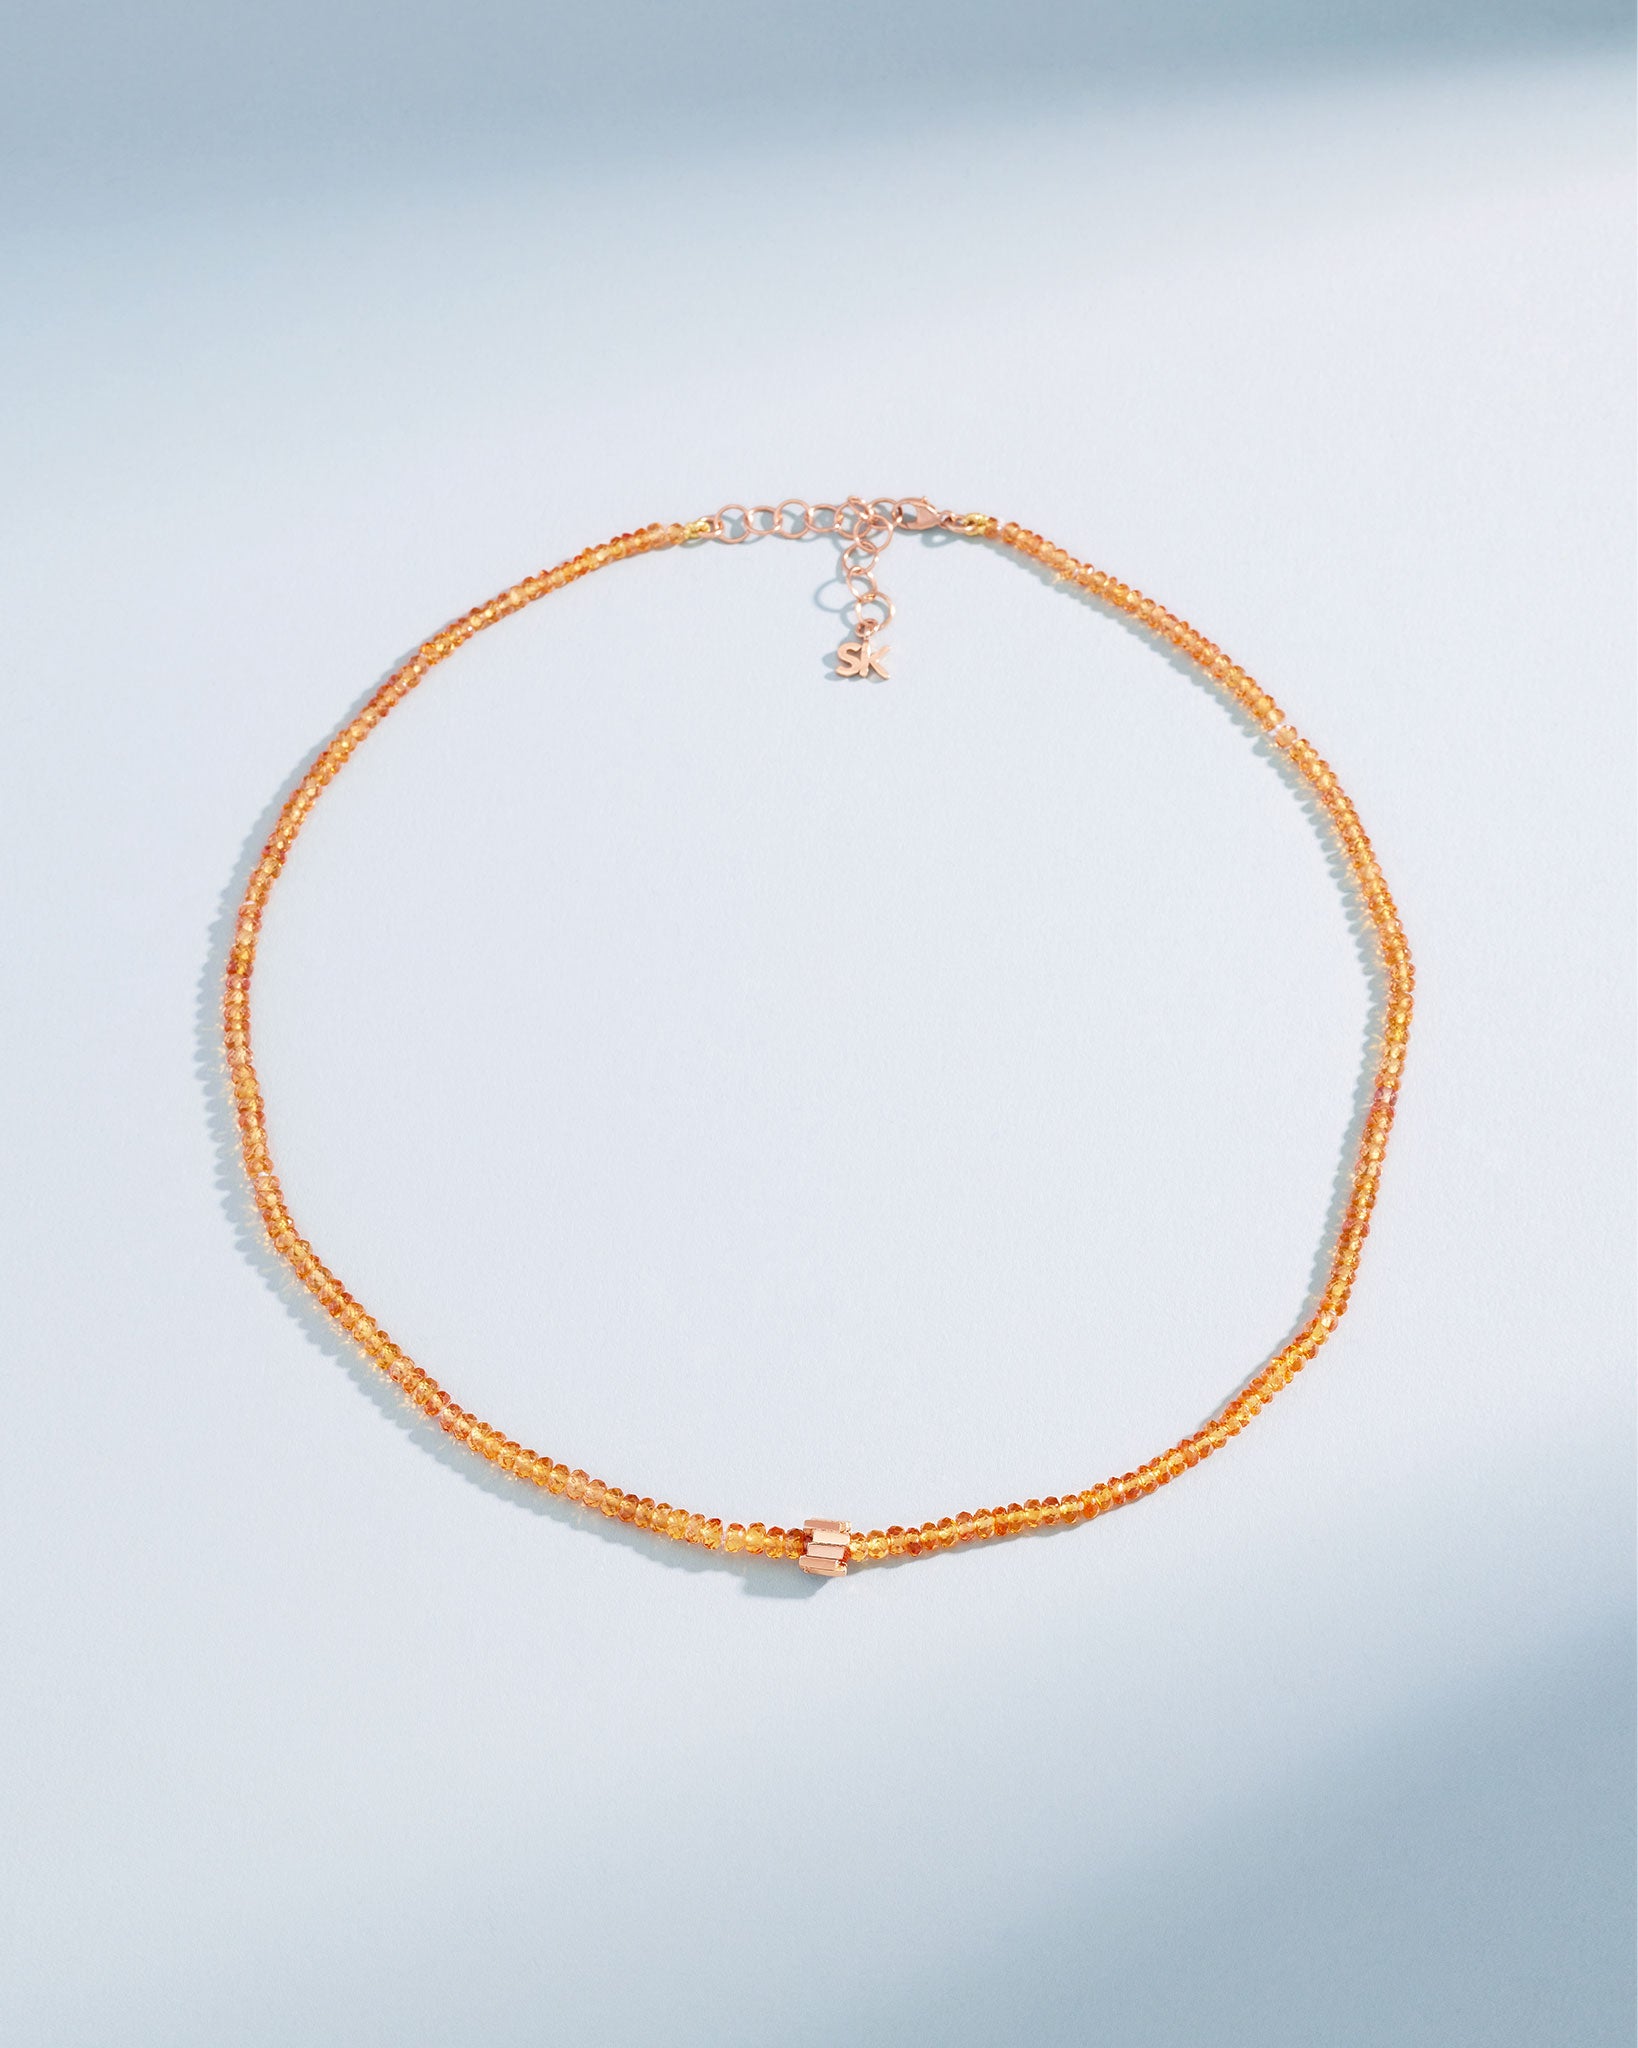 Suzanne Kalan Infinite Beaded Citrine & Mini Golden Rondelle Necklace in 18k rose gold